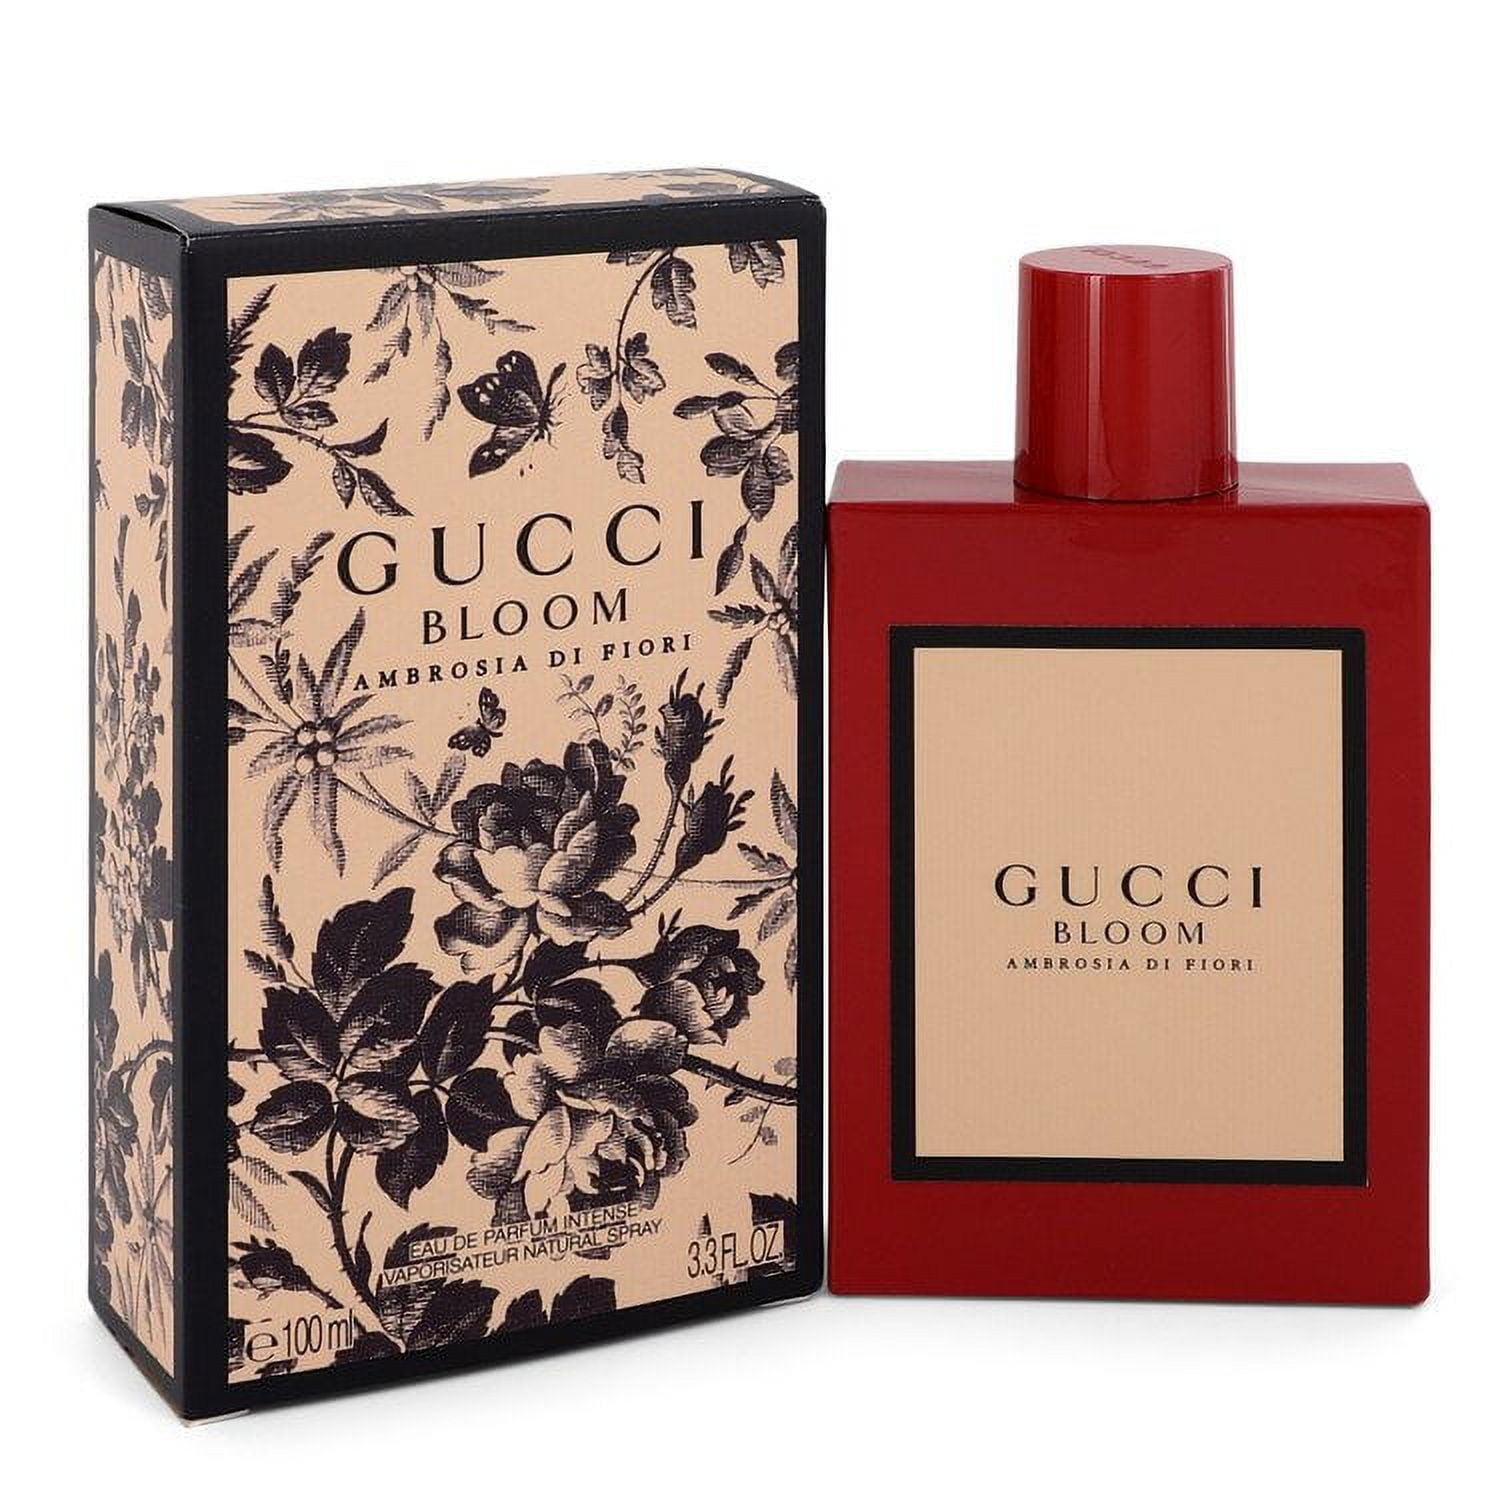 Gucci Bloom Profumo di Fiori Eau de Parfum Spray 3.3 oz